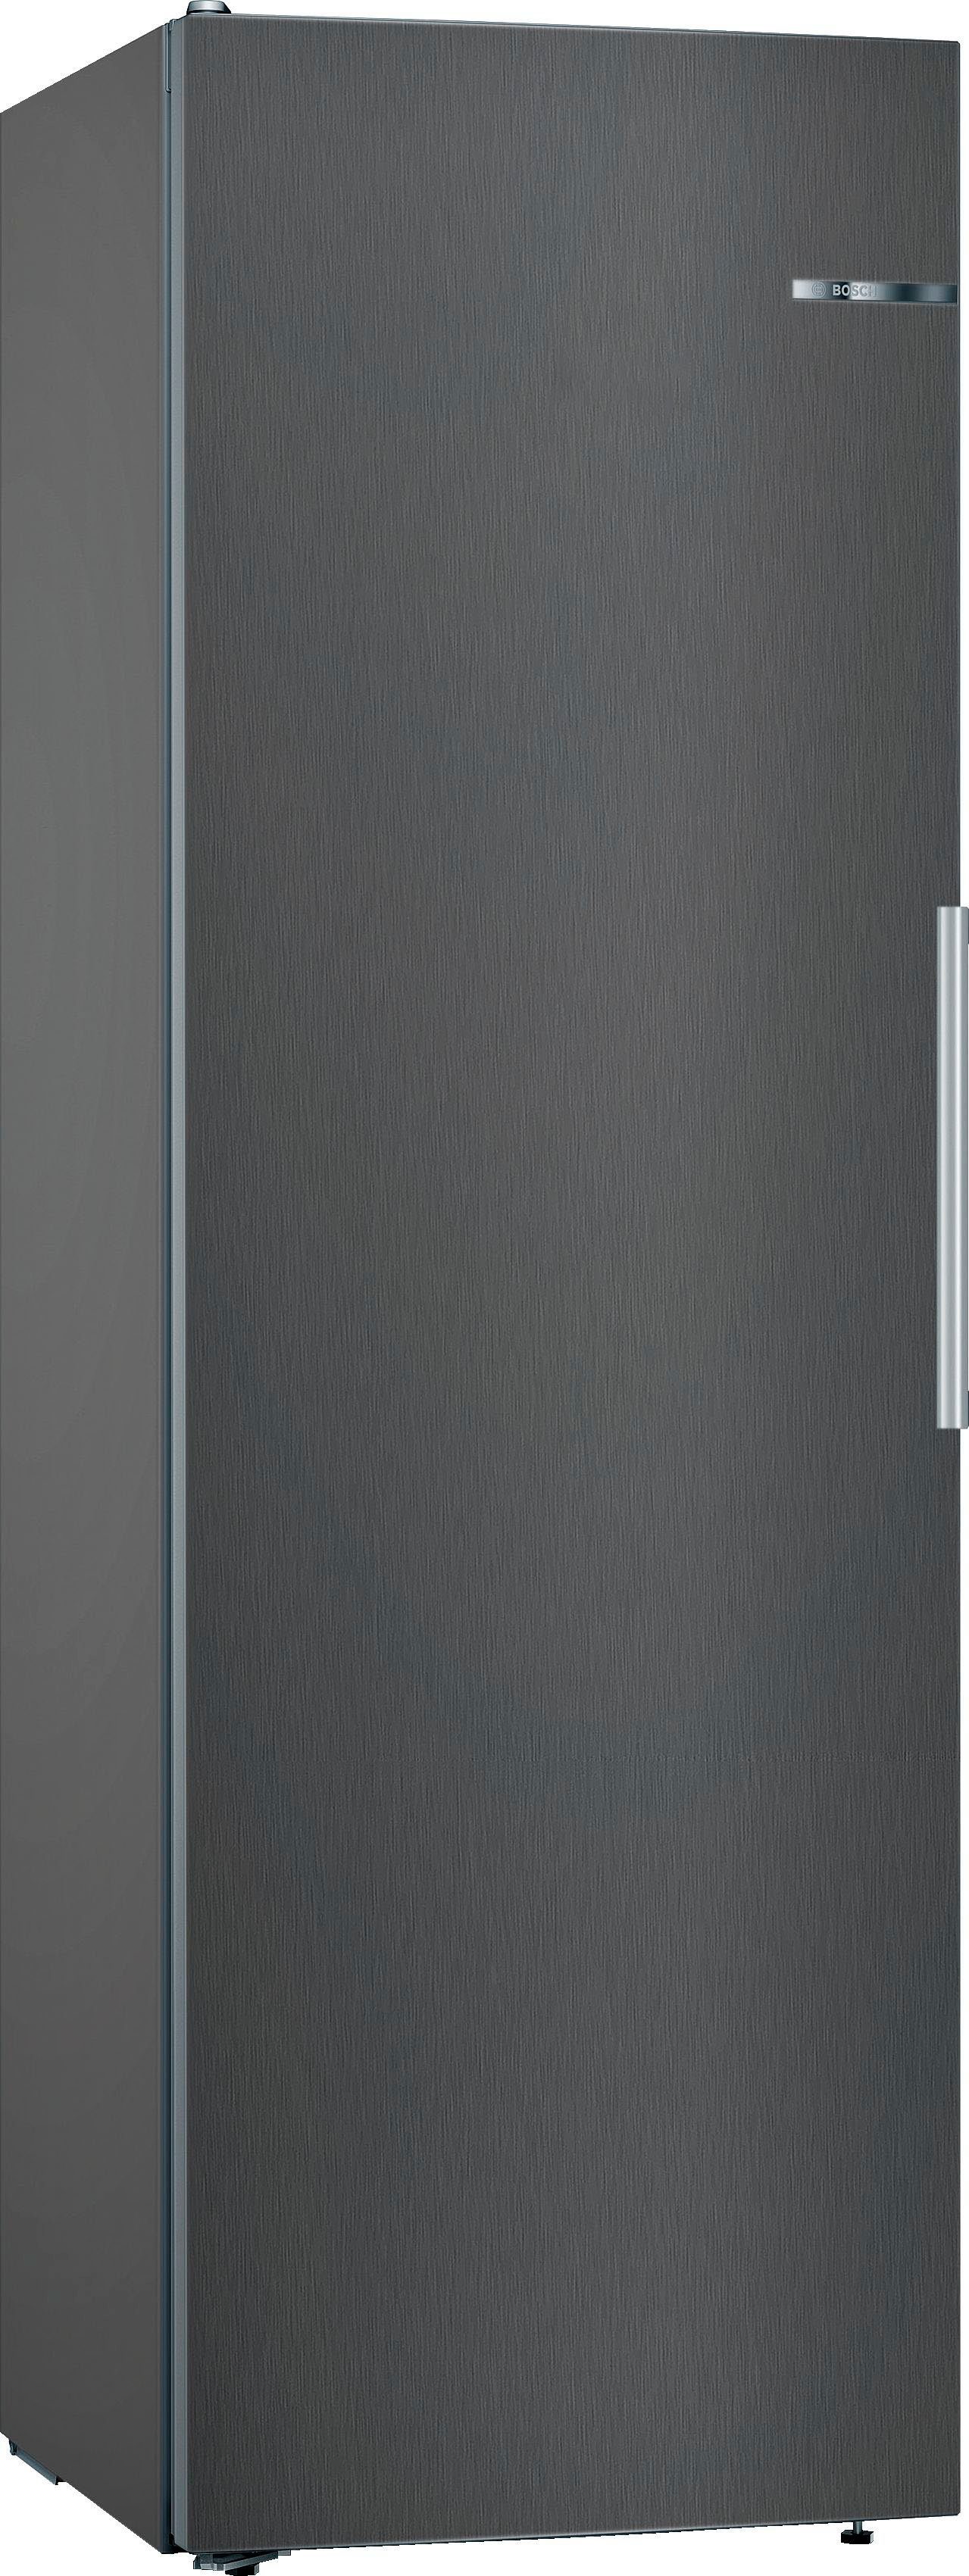 cm BOSCH Kühlschrank breit 60 KSV36VXEP, hoch, cm 186